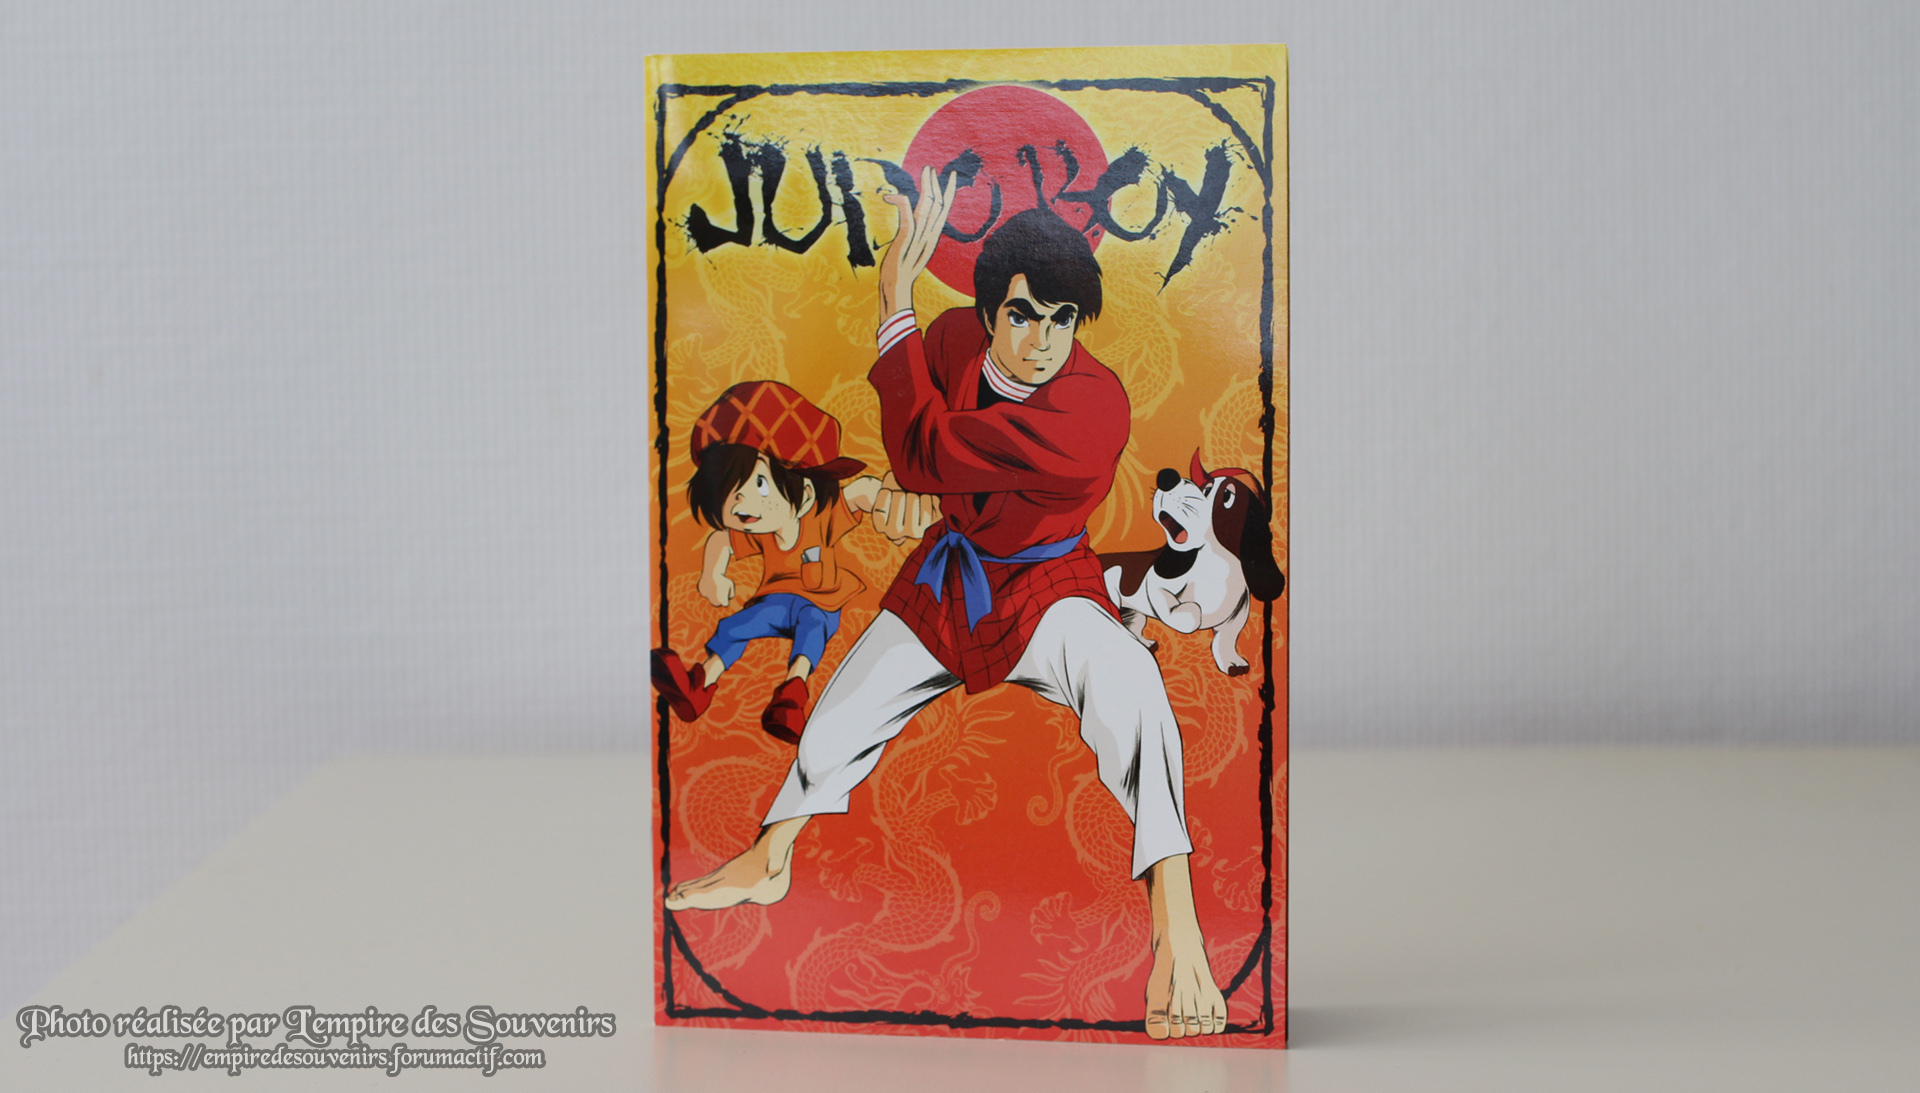 Judo Boy, test DVD 9jts